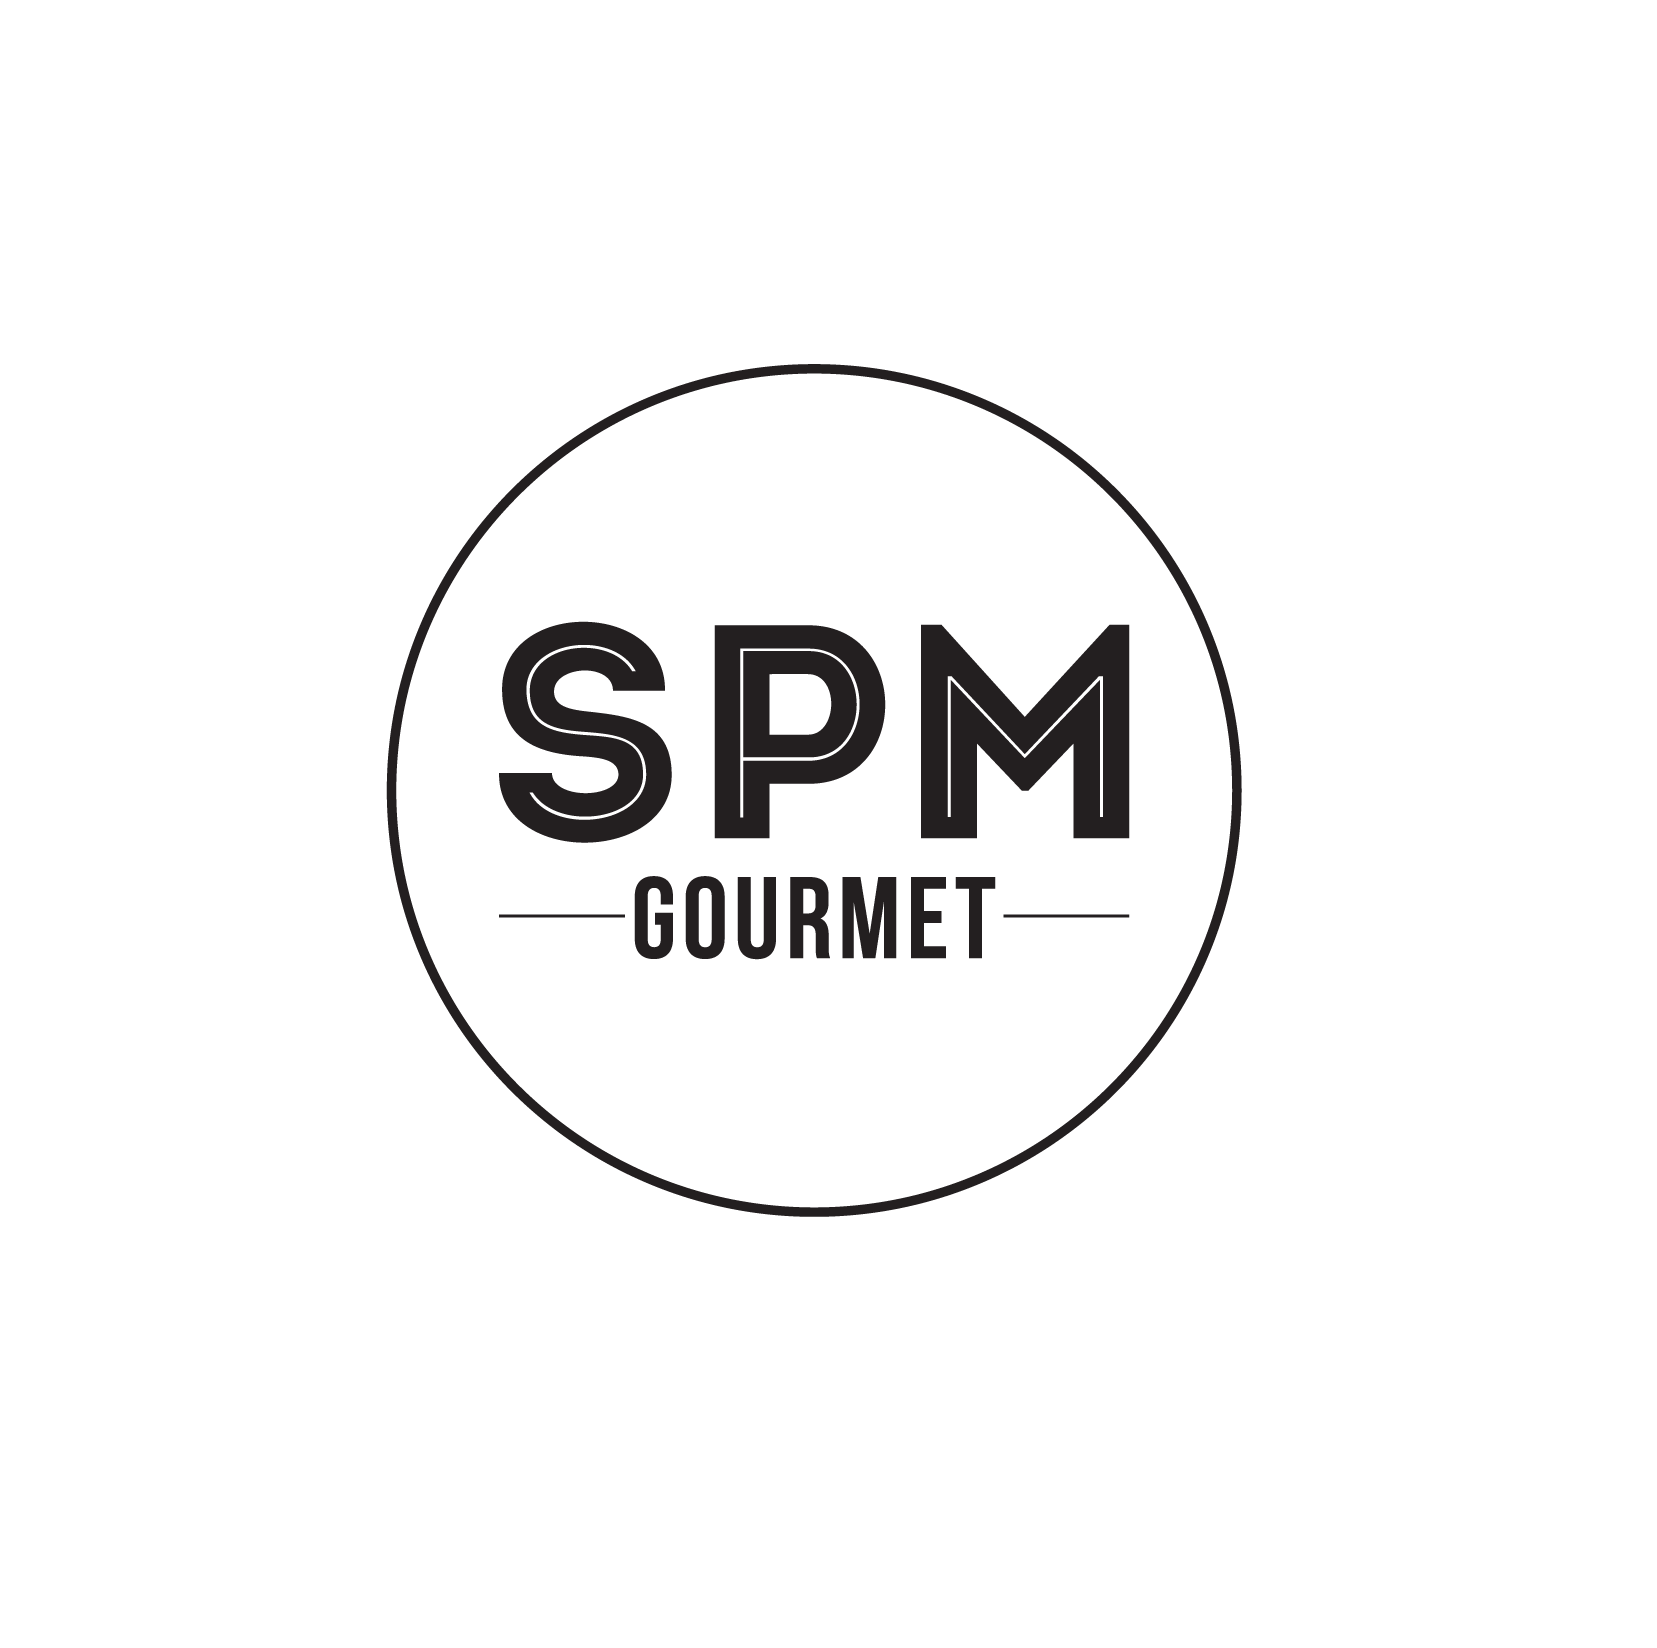 SPM Gourmet